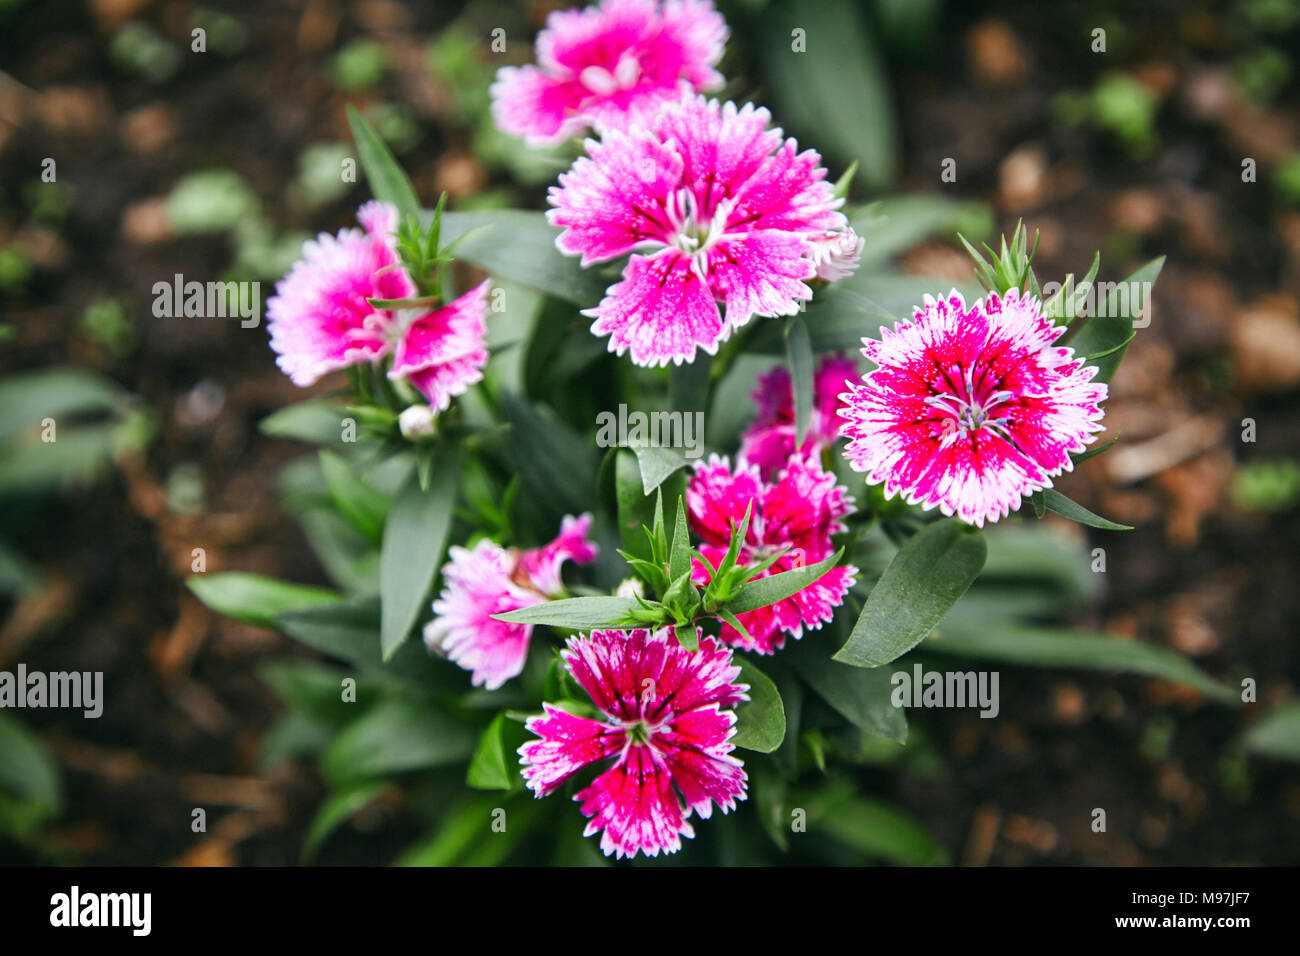 Dianthus flower aka Pinks Stock Photo